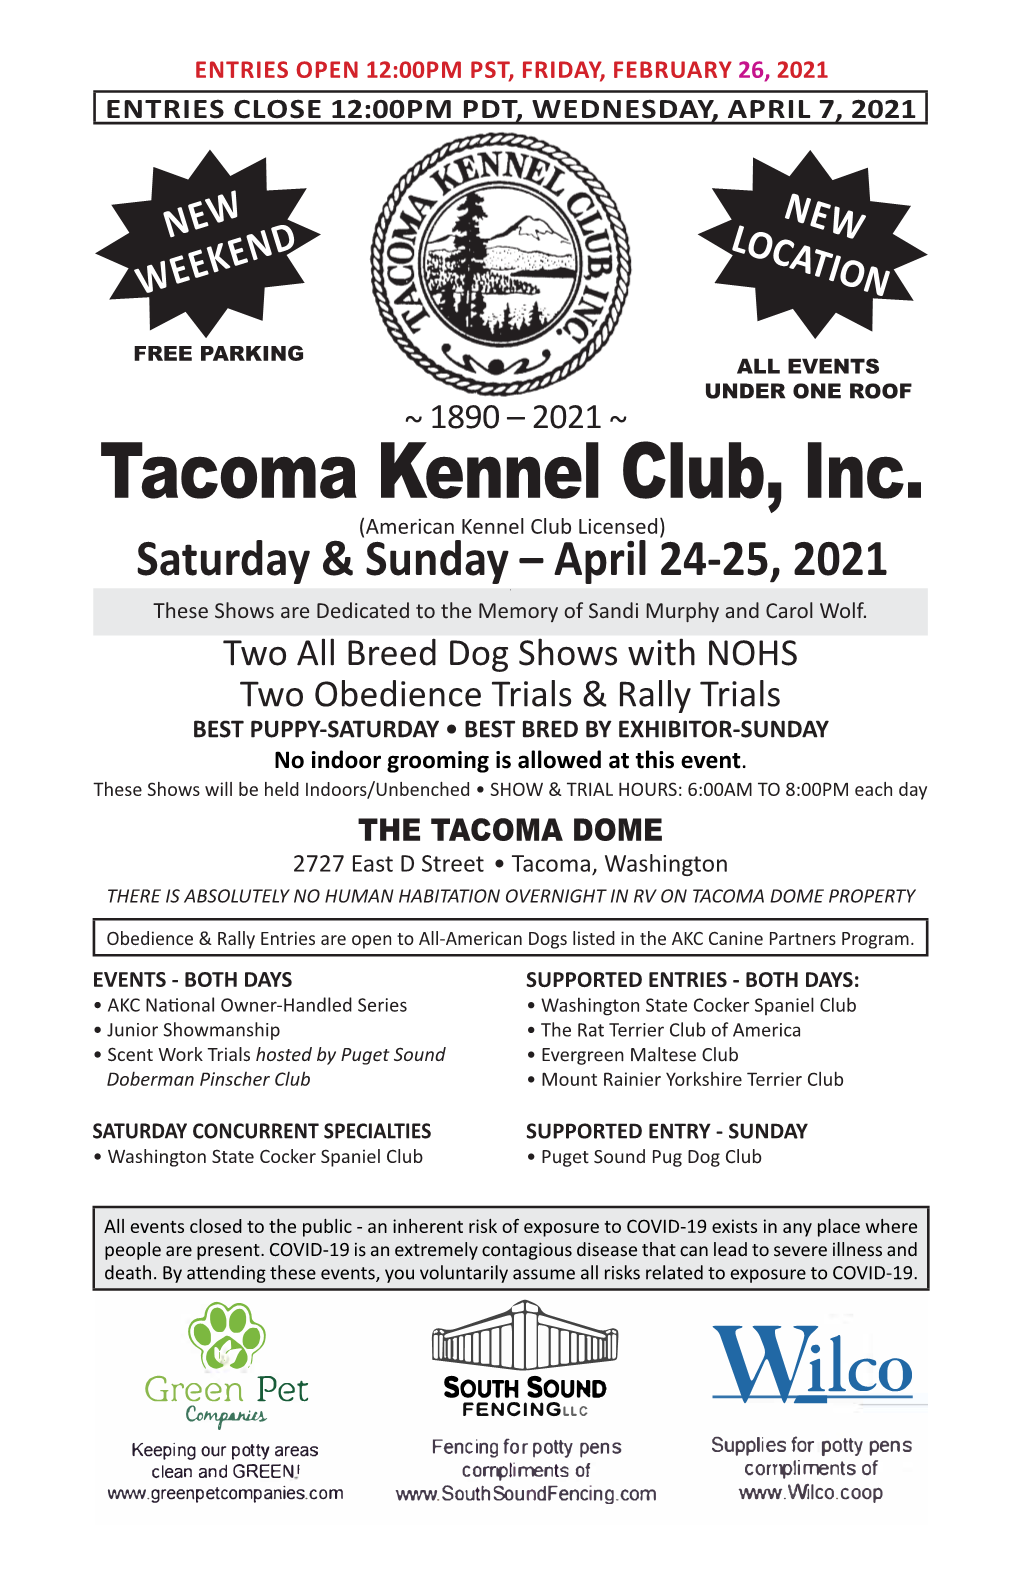 Tacoma Kennel Club, Inc